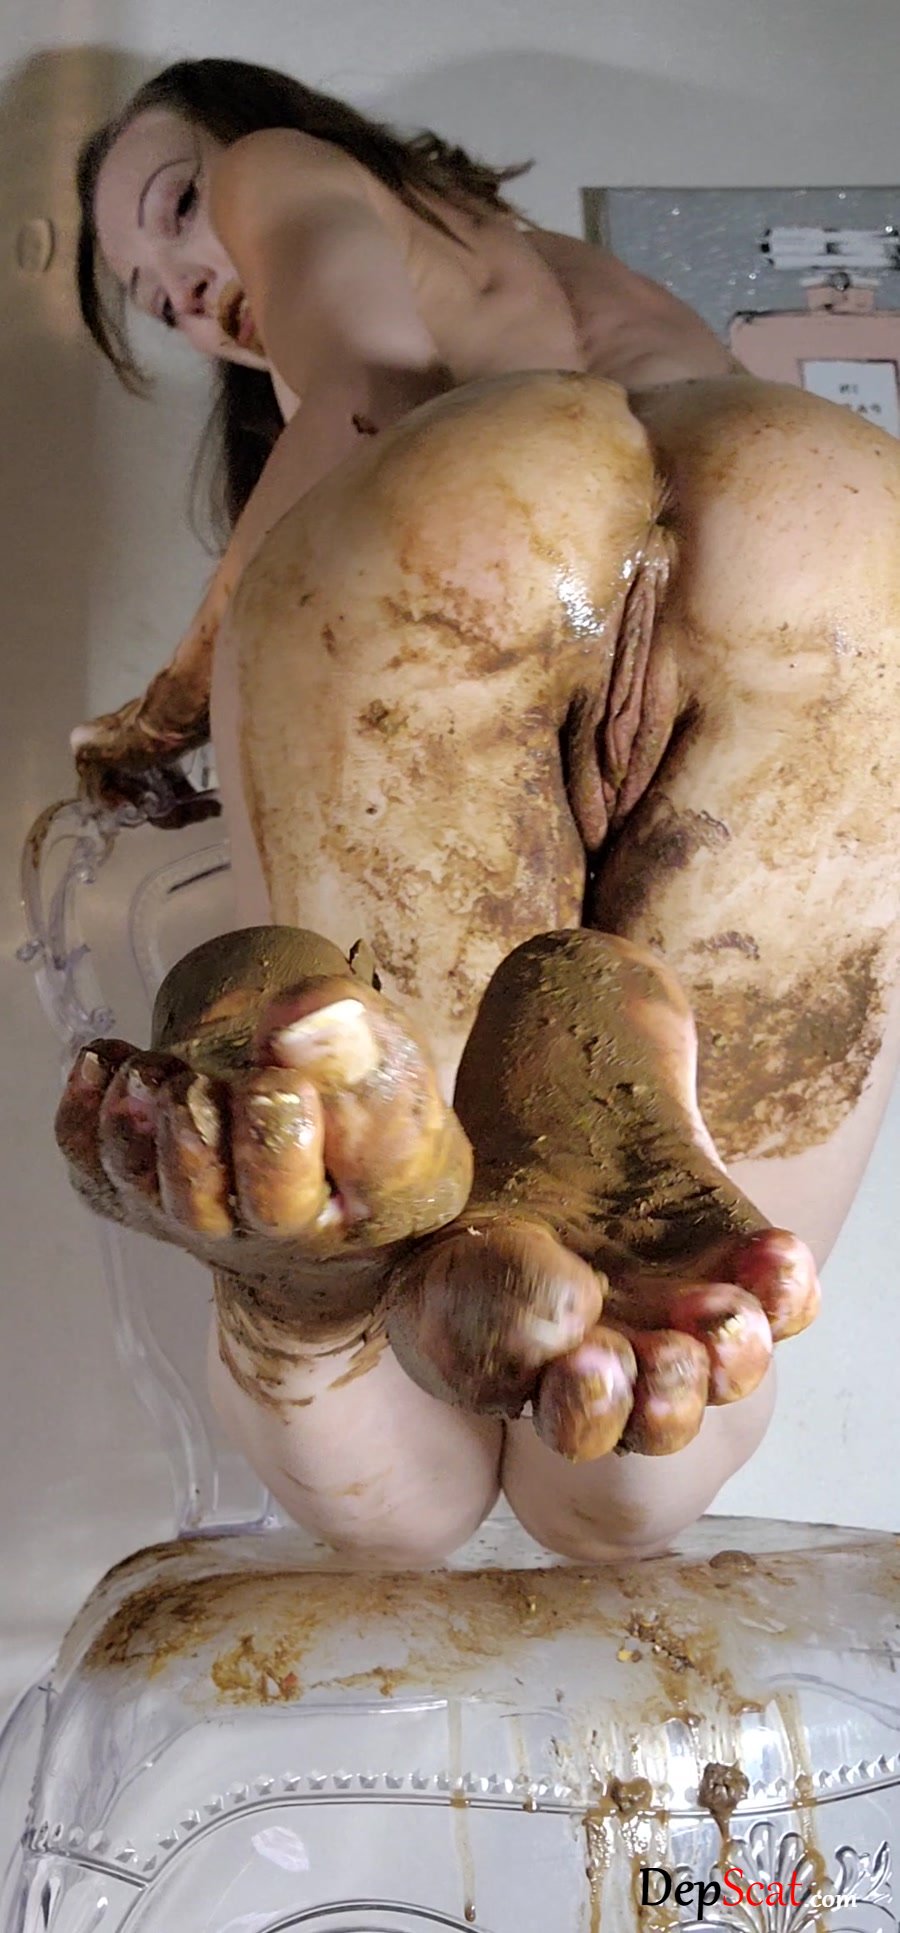 Foot Fetish: (Mycelium Mother) - Dirtytalking Toes [UltraHD 4K] - Solo, Feet